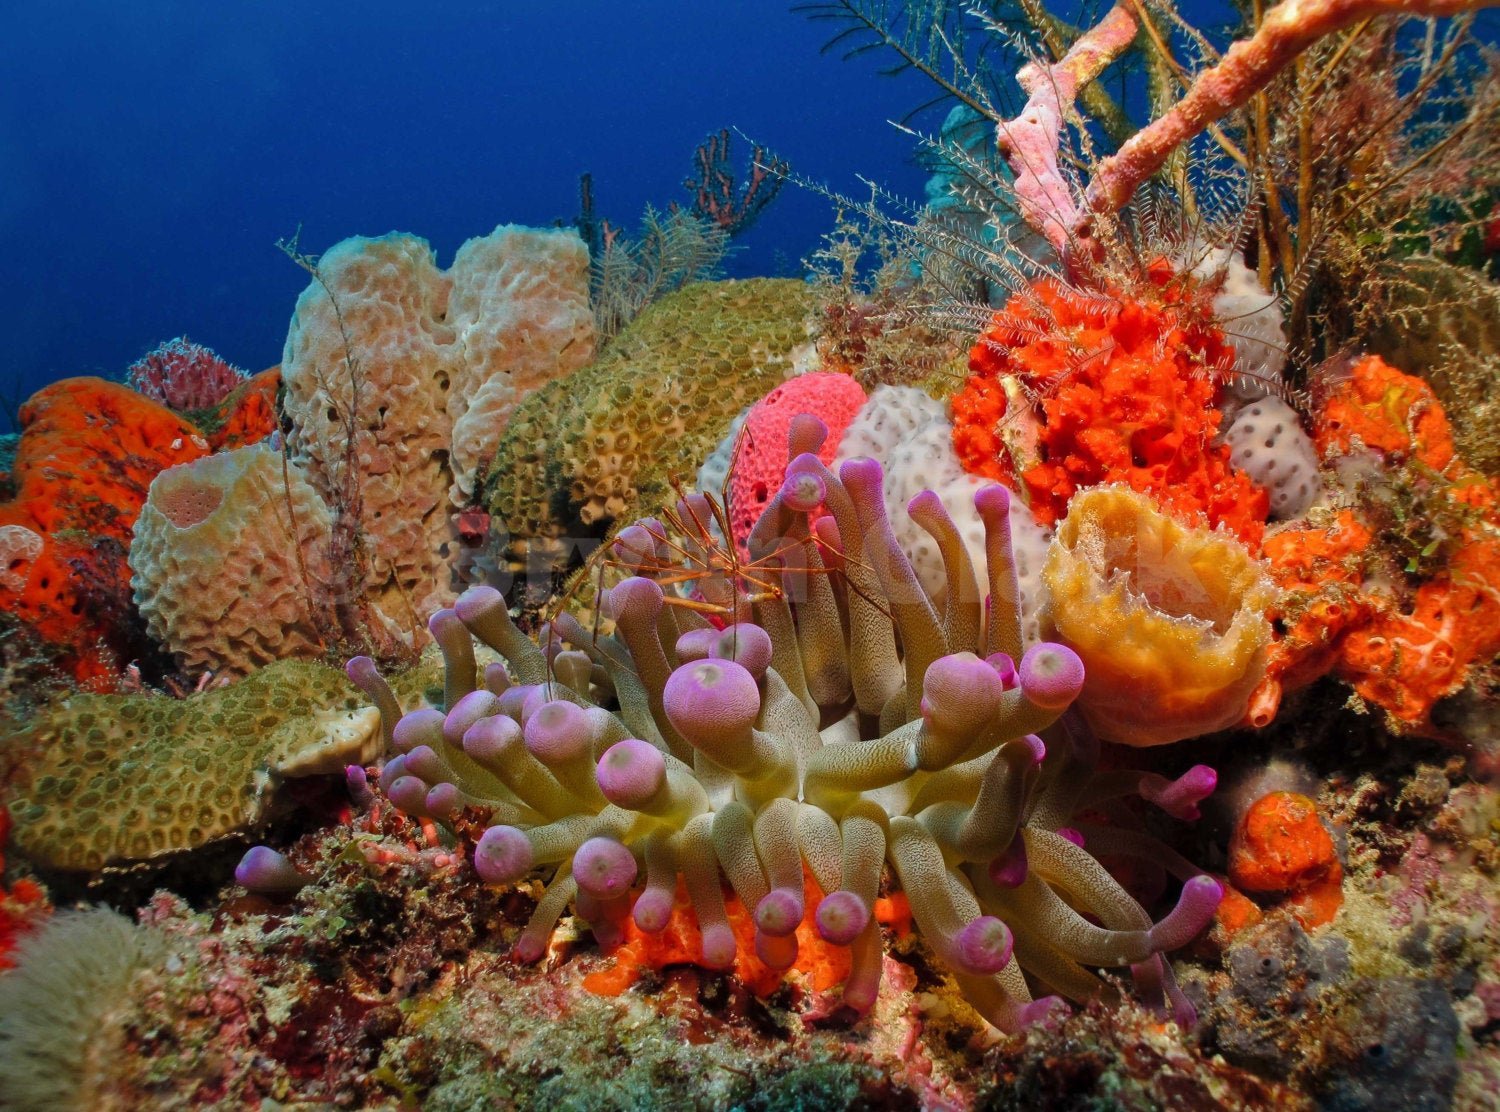 Лучший коралловый риф. Коралловый Барьерный риф. Коралловые рифы Карибского моря. Герматипные кораллы. Чин Джейсон "коралловые рифы".